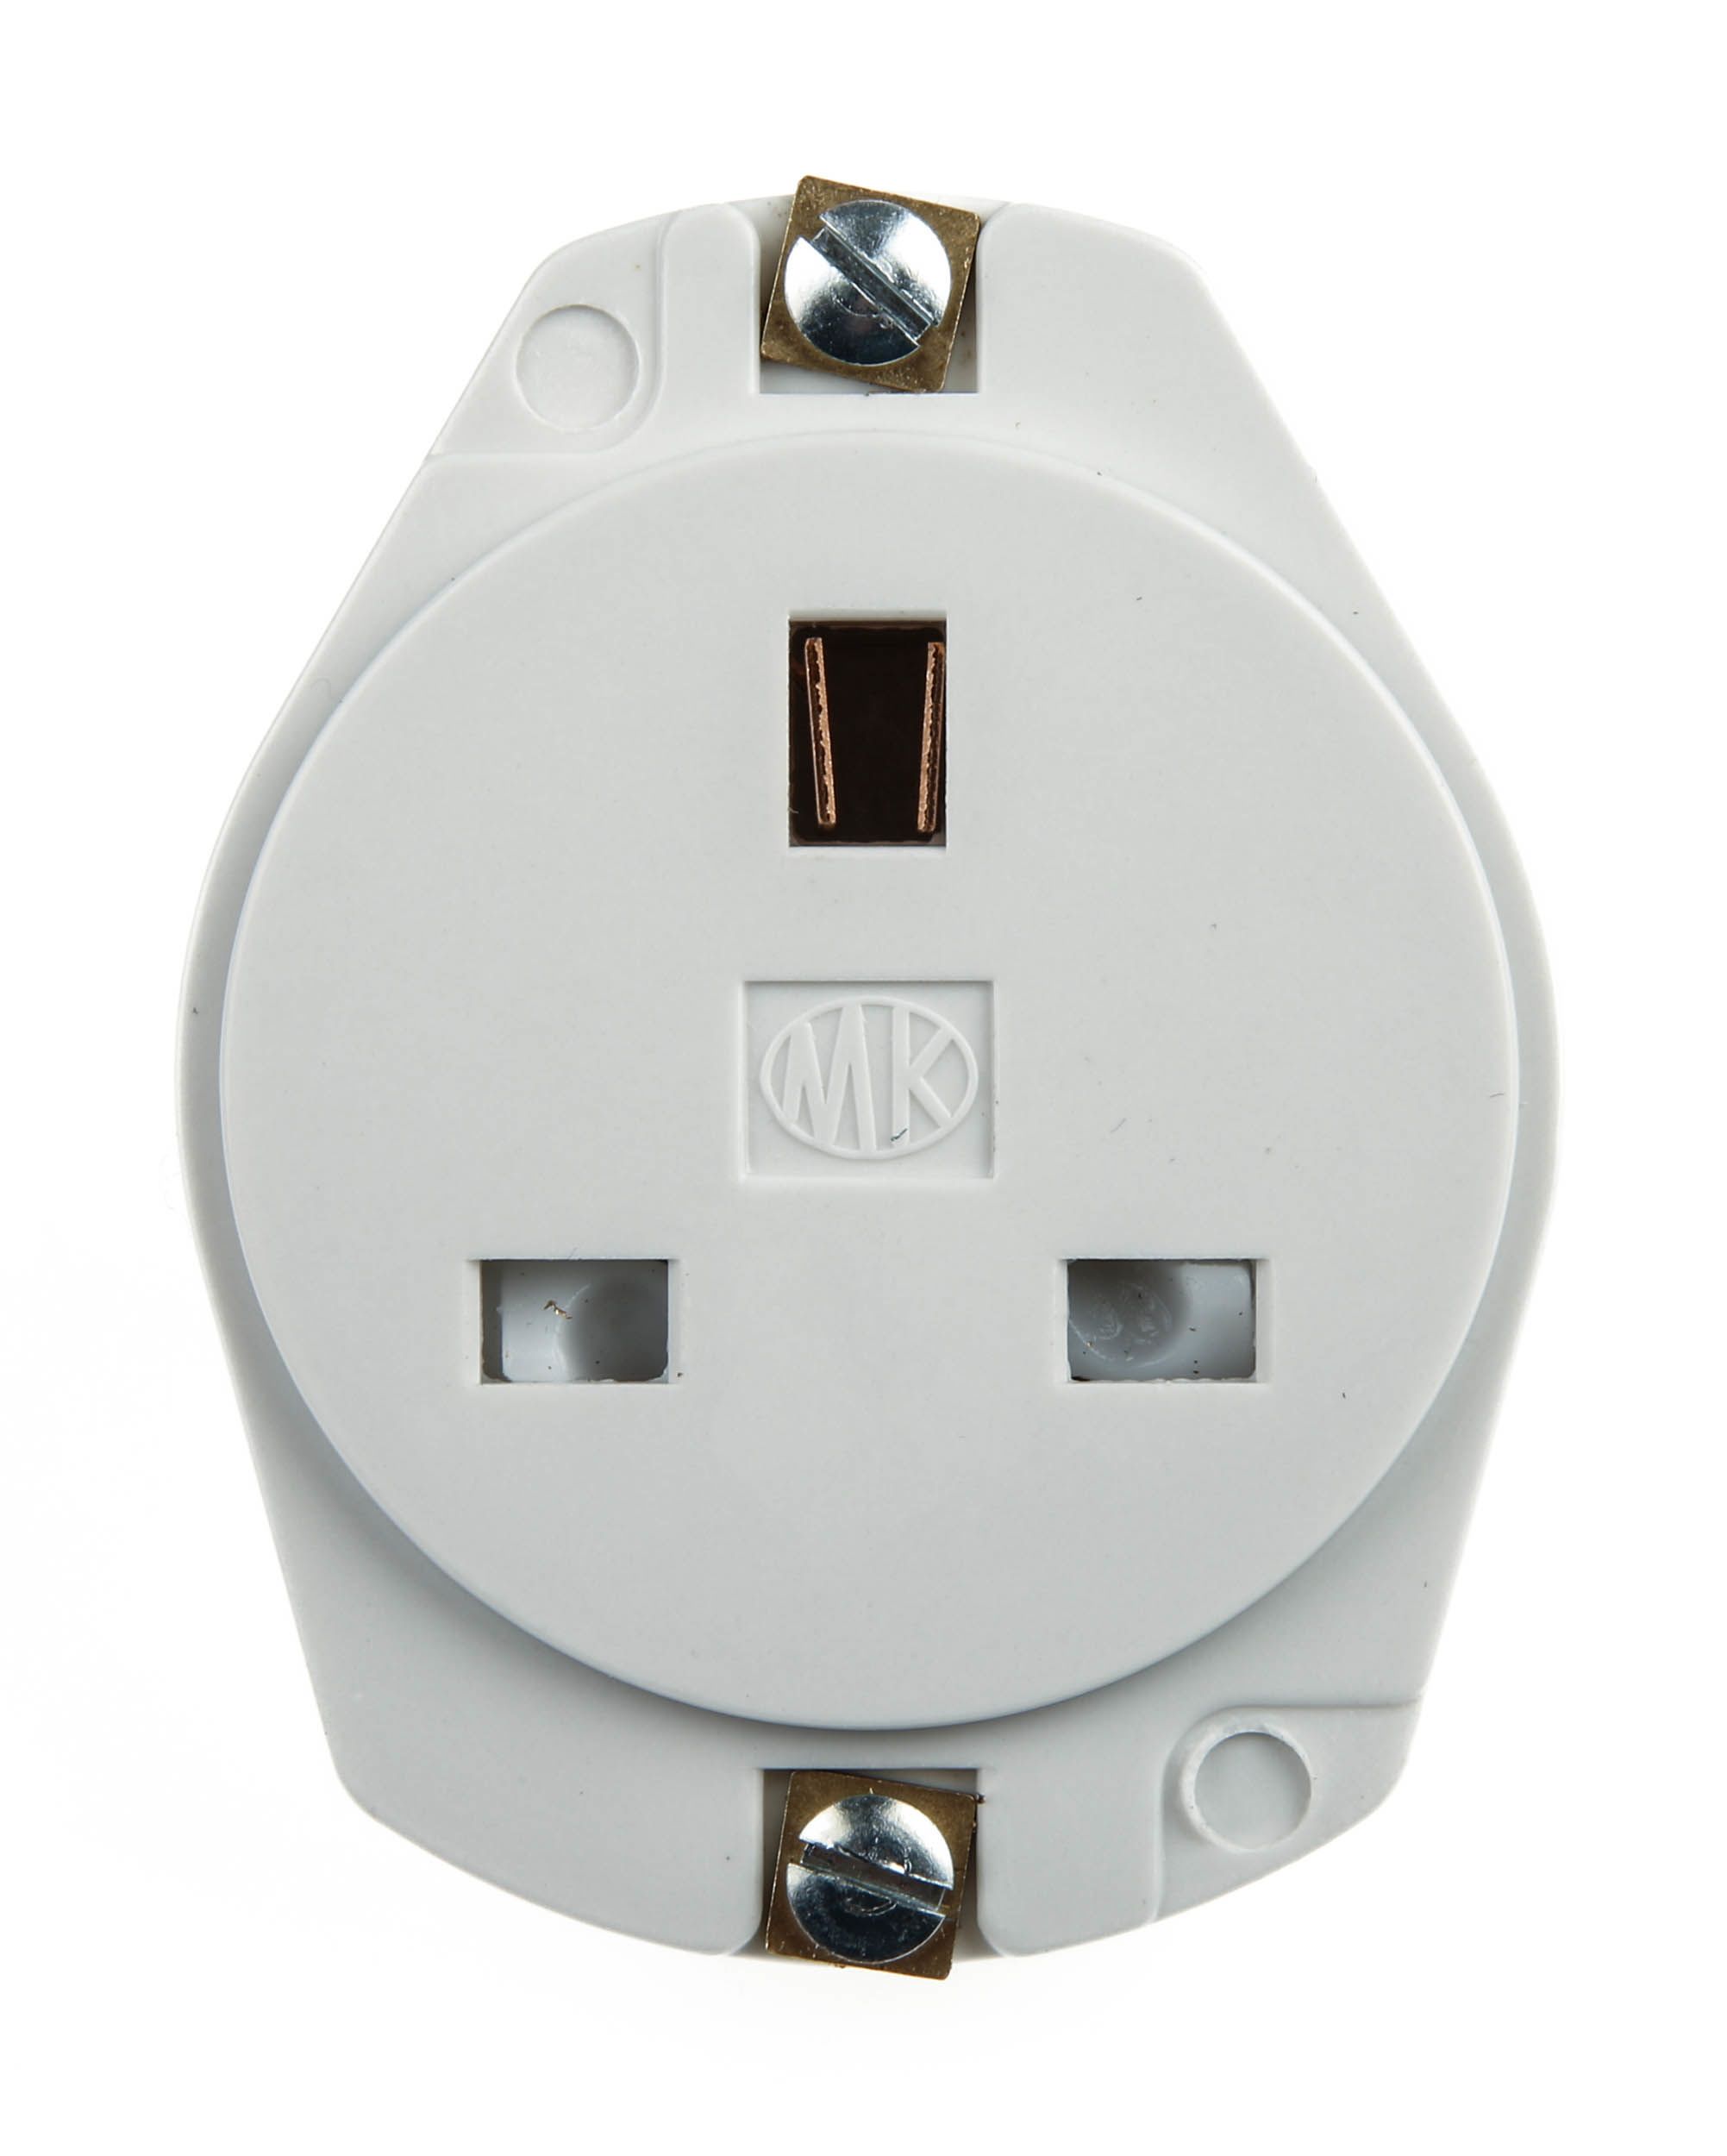 MK Electric White 1 Gang Plug Socket, 13A, Type G - British, Indoor Use